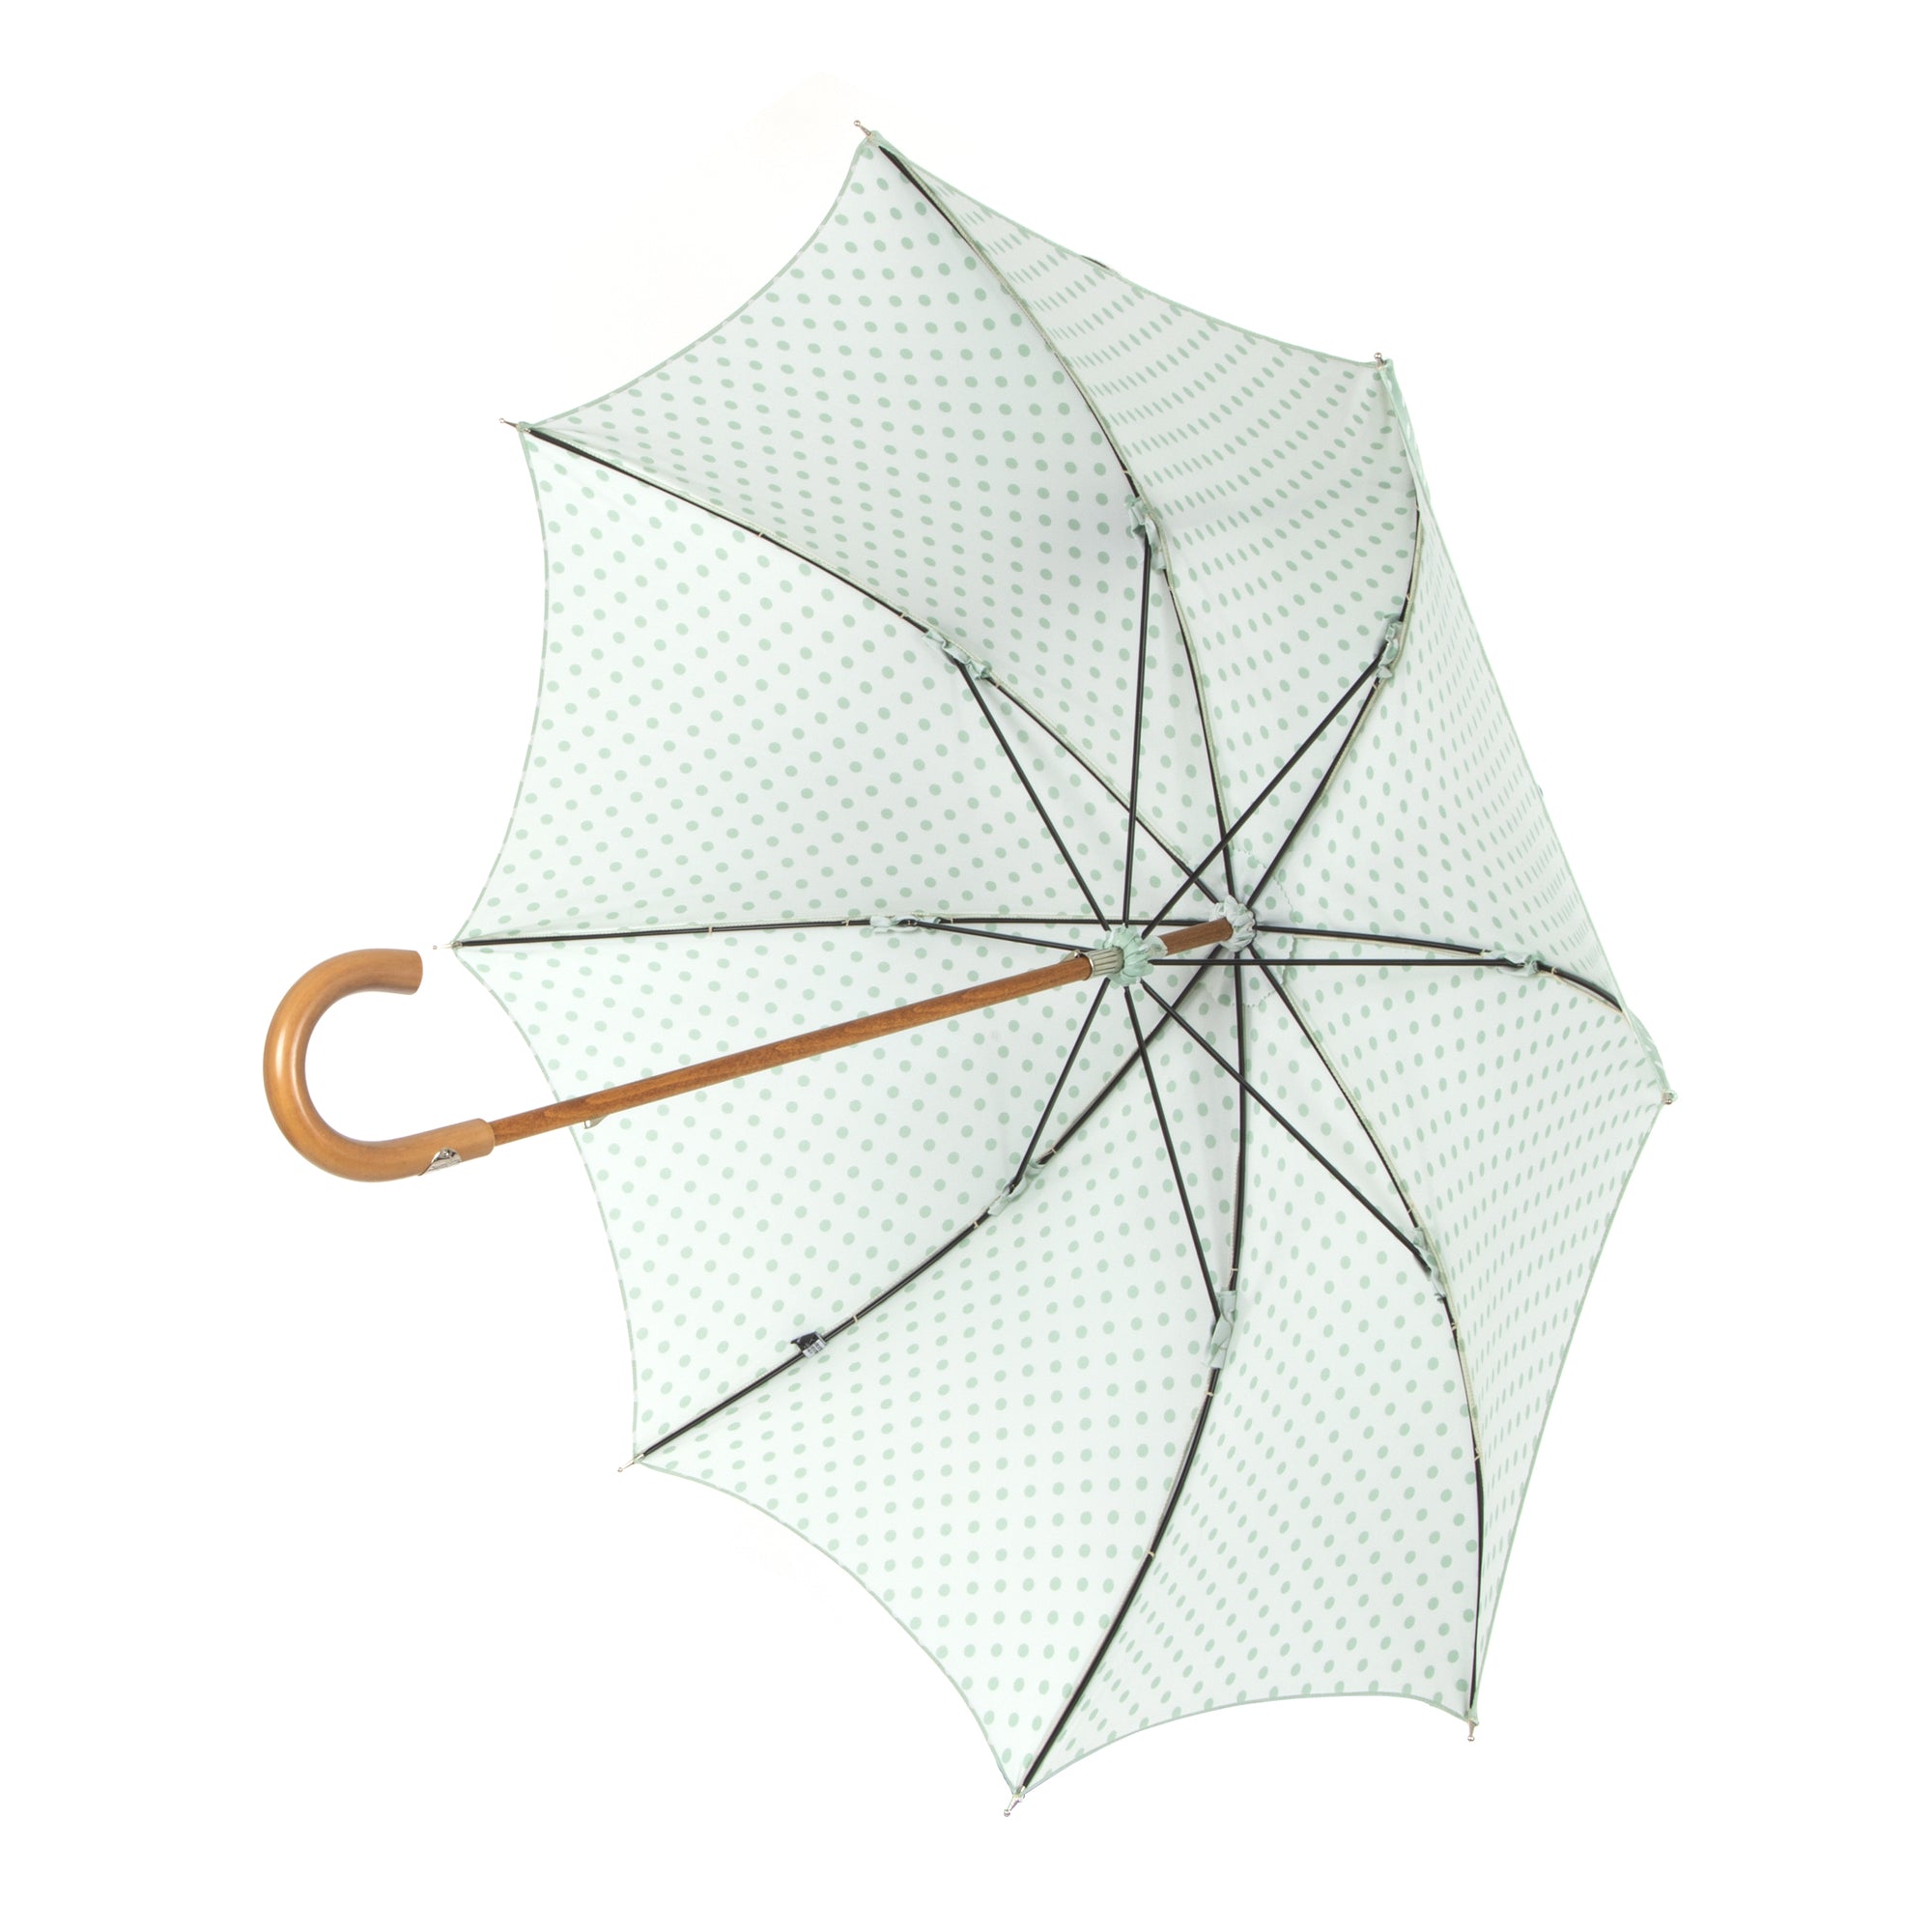 Tampus Umbrella with Malacca Handle